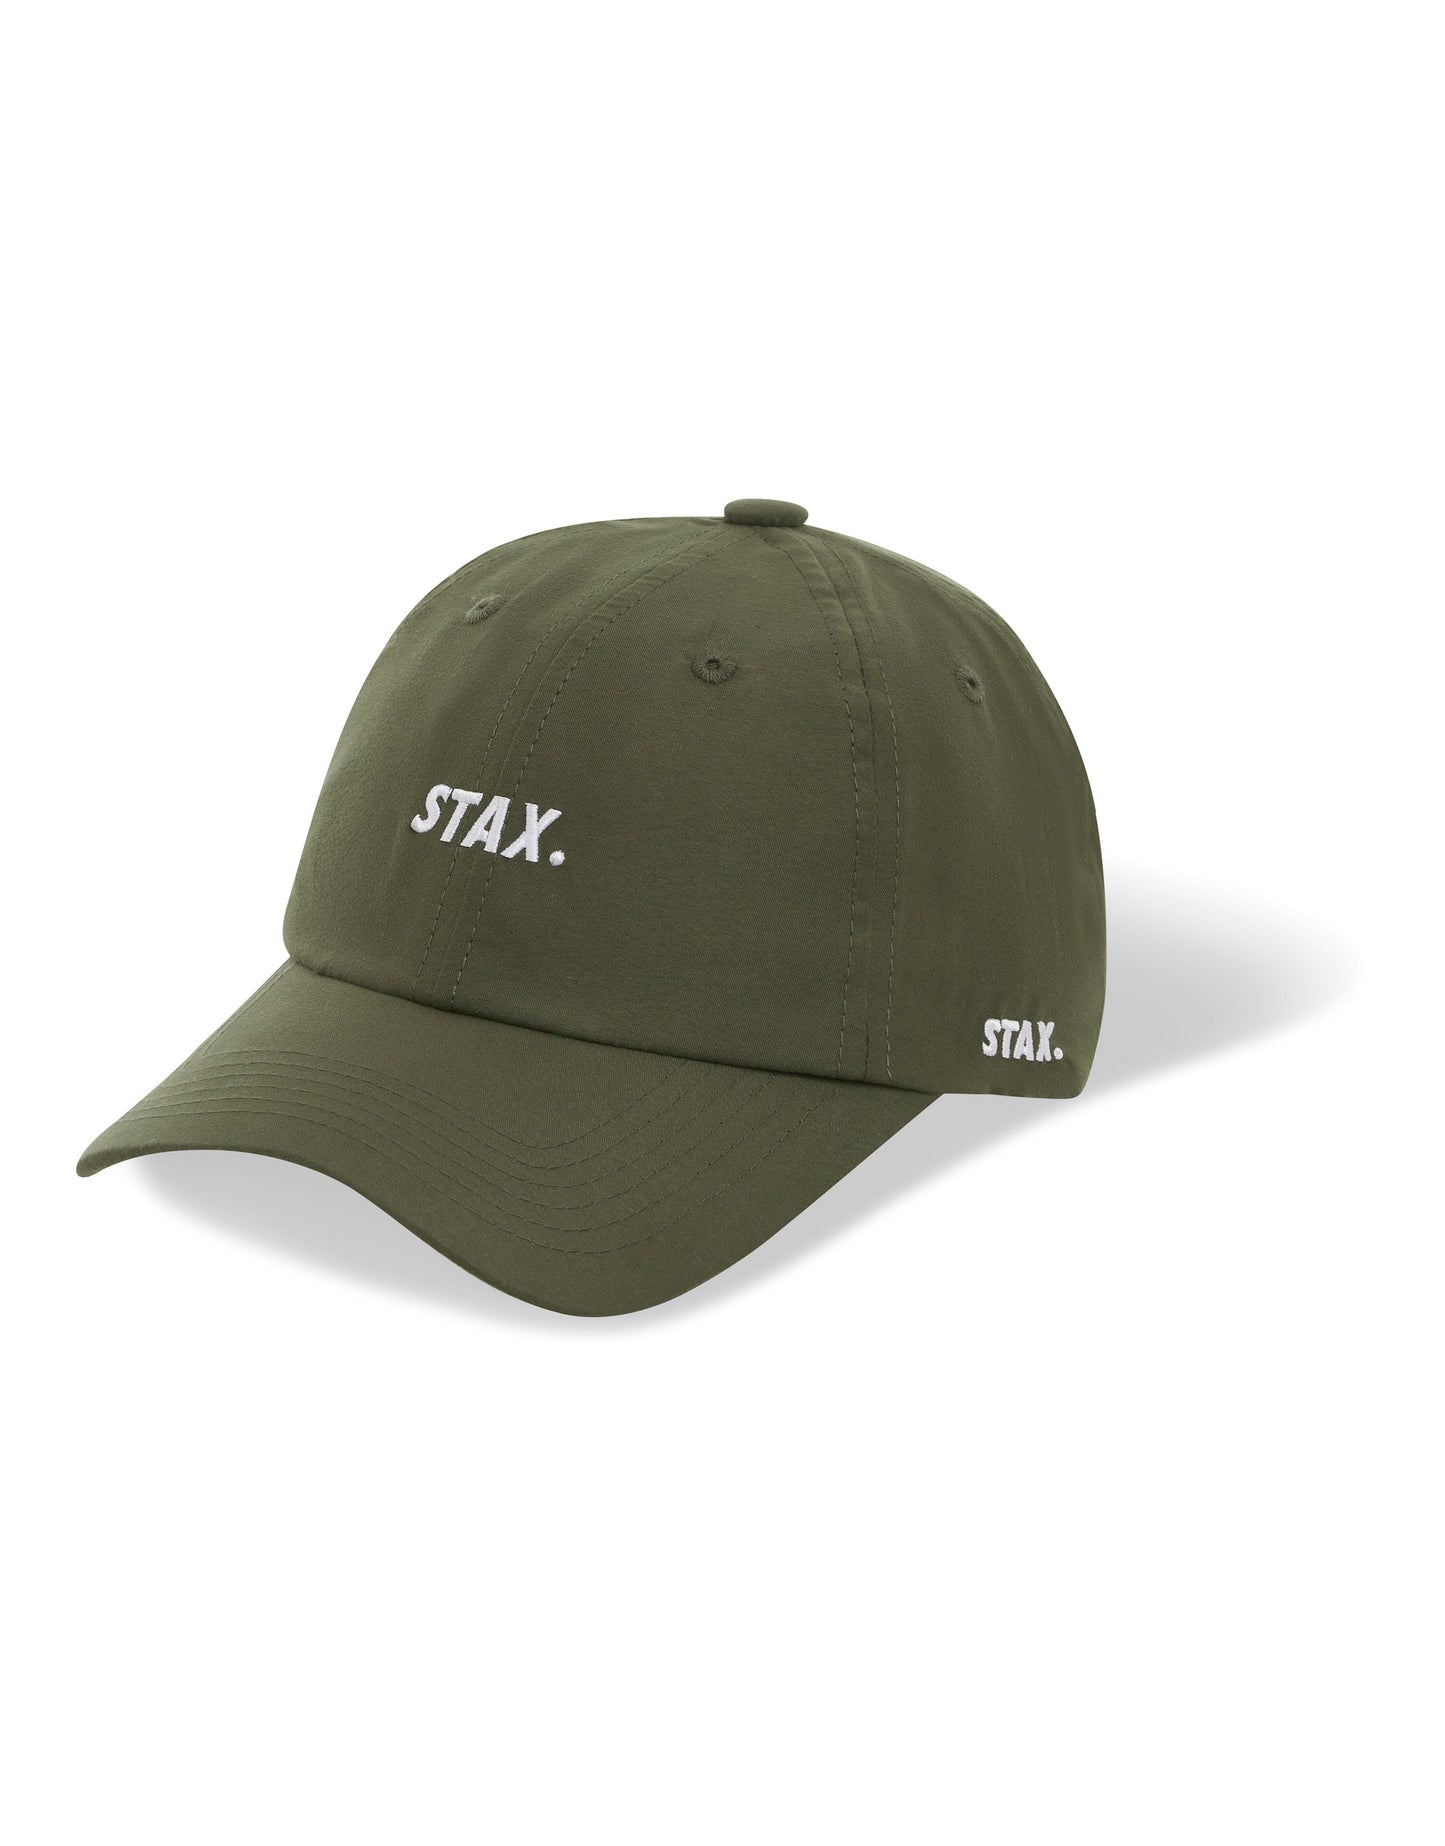 STAX. Official Dad Cap - Khaki